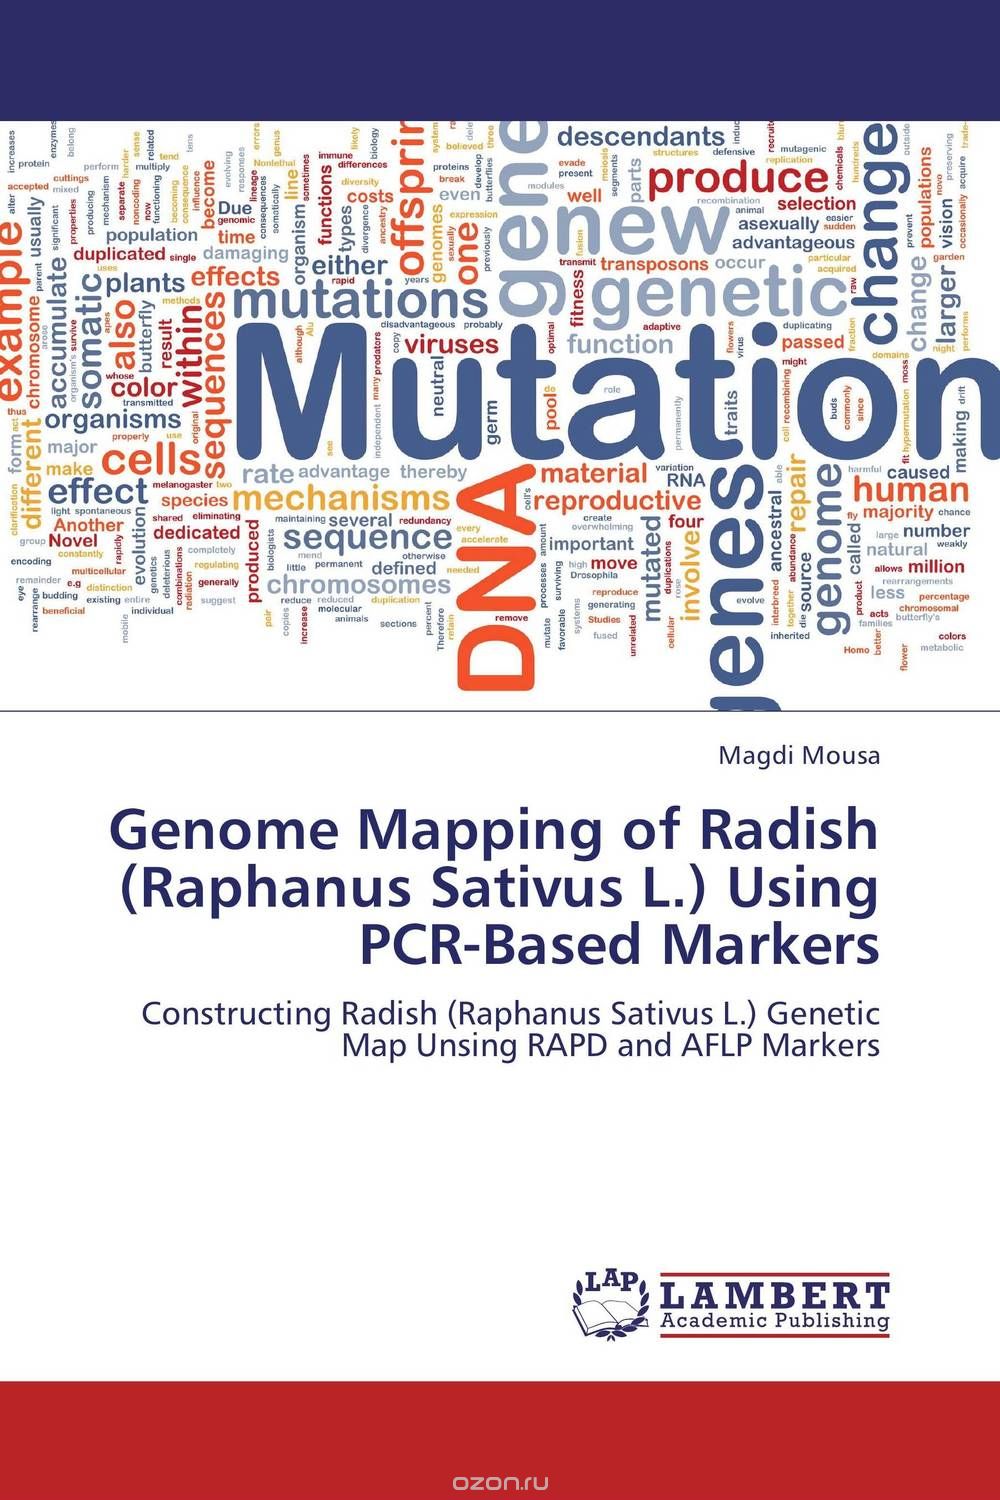 Скачать книгу "Genome Mapping of Radish (Raphanus Sativus L.) Using PCR-Based Markers"